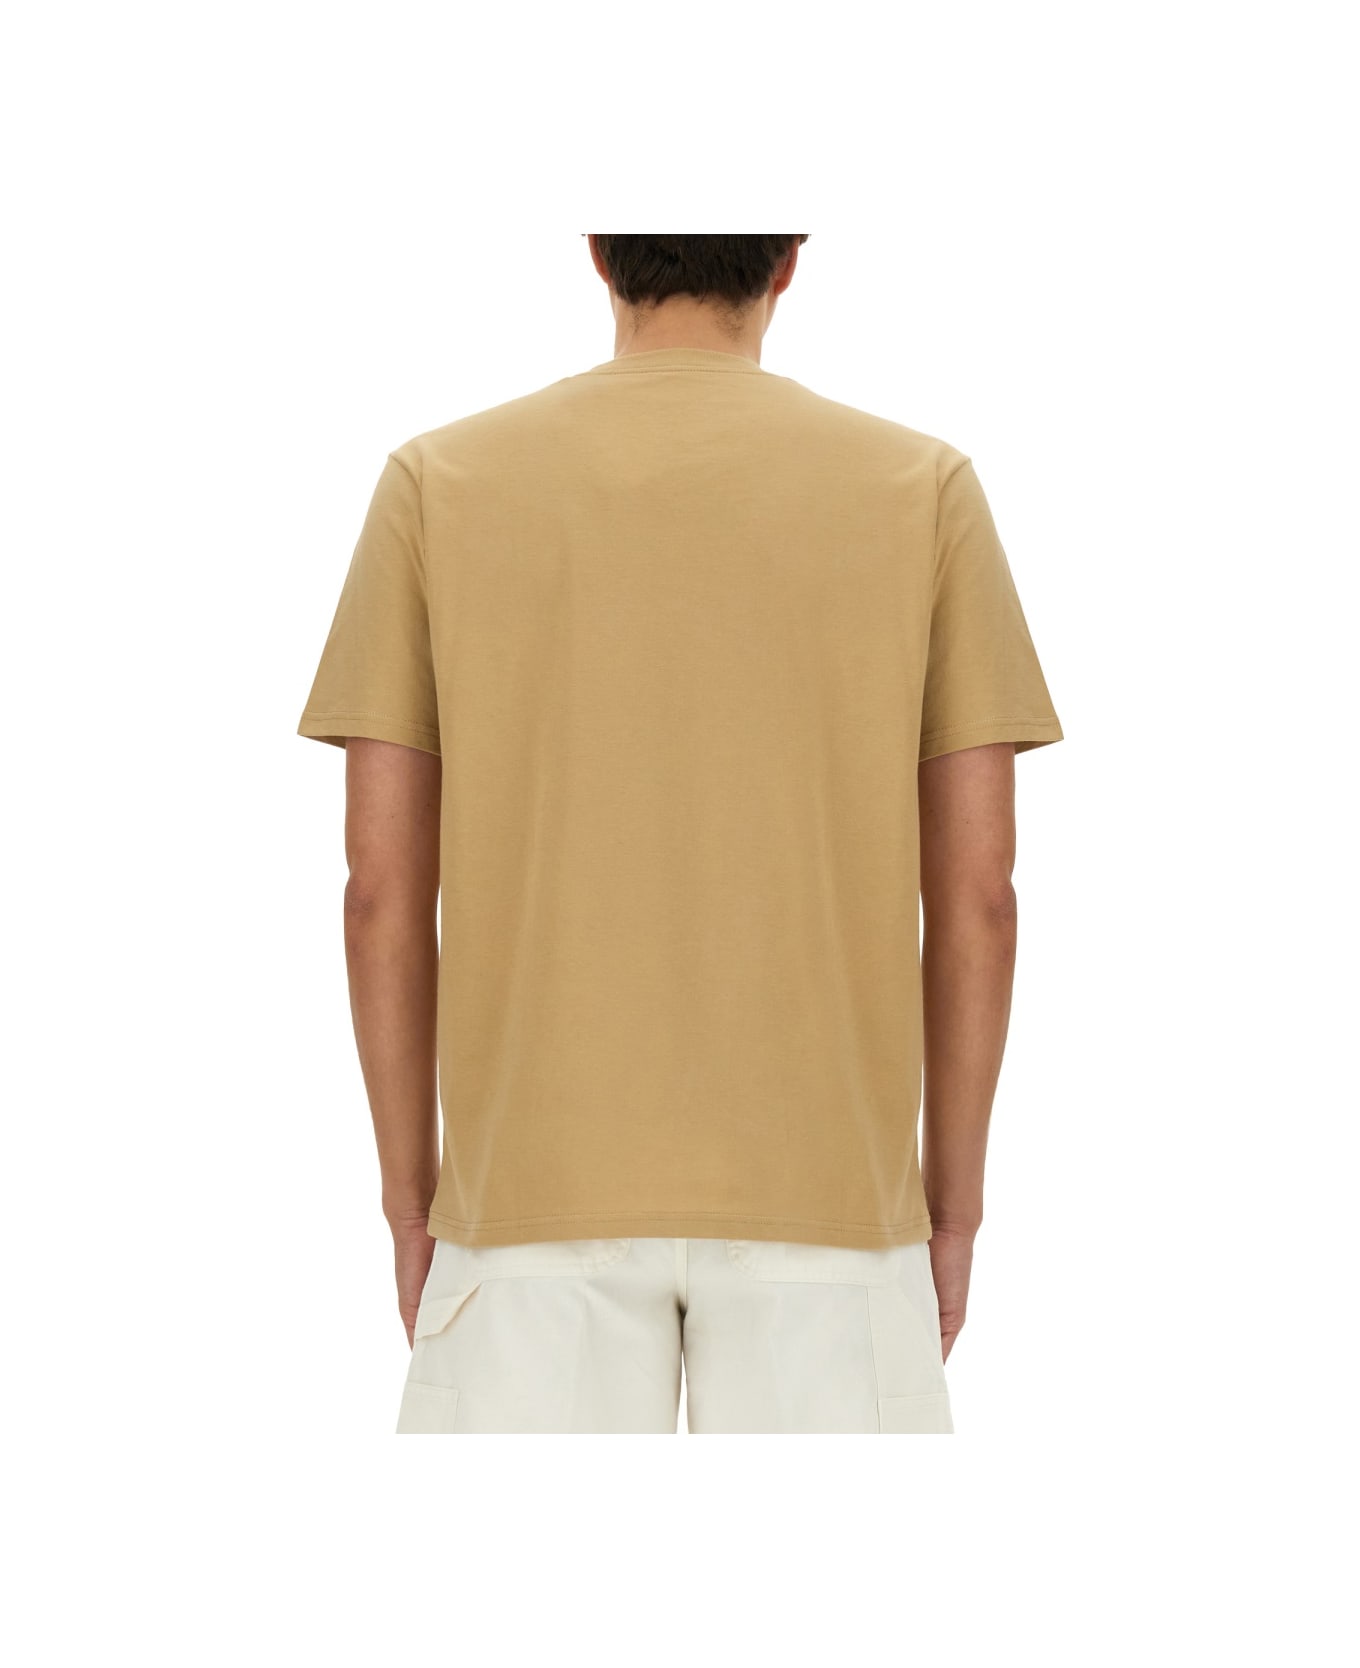 Carhartt T-shirt "palette" - BEIGE シャツ